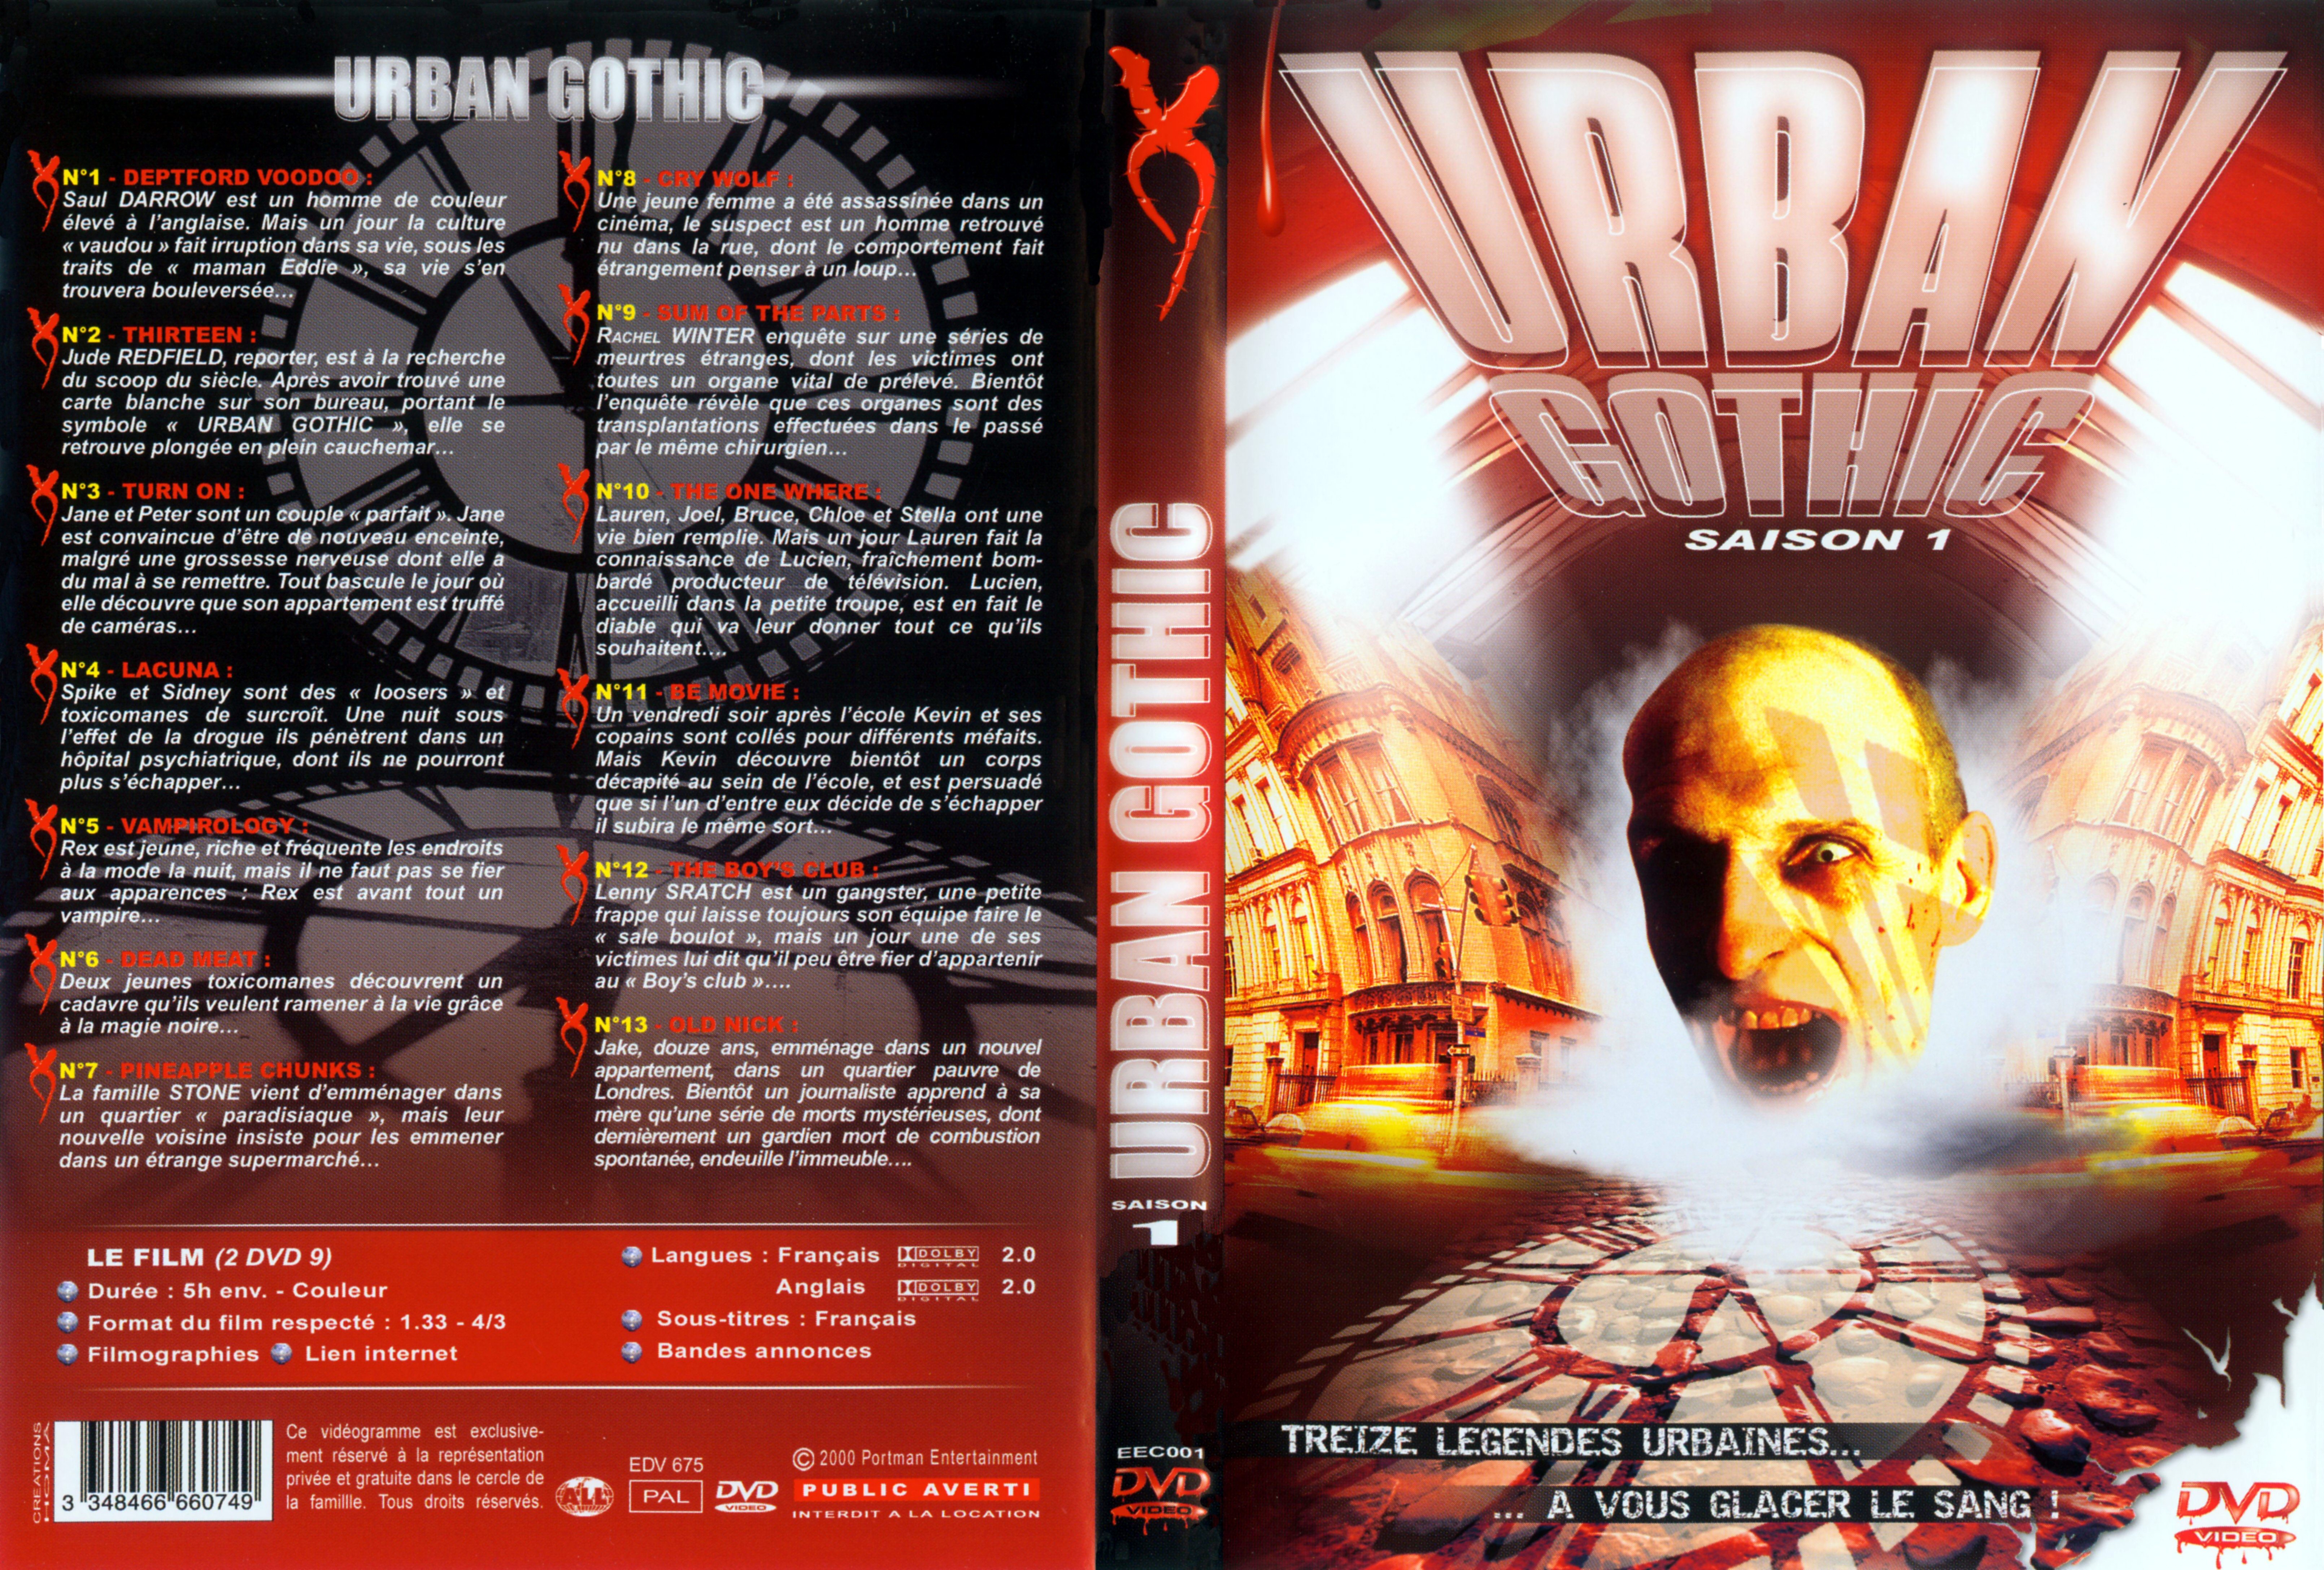 Jaquette DVD Urban Gothic saison 1